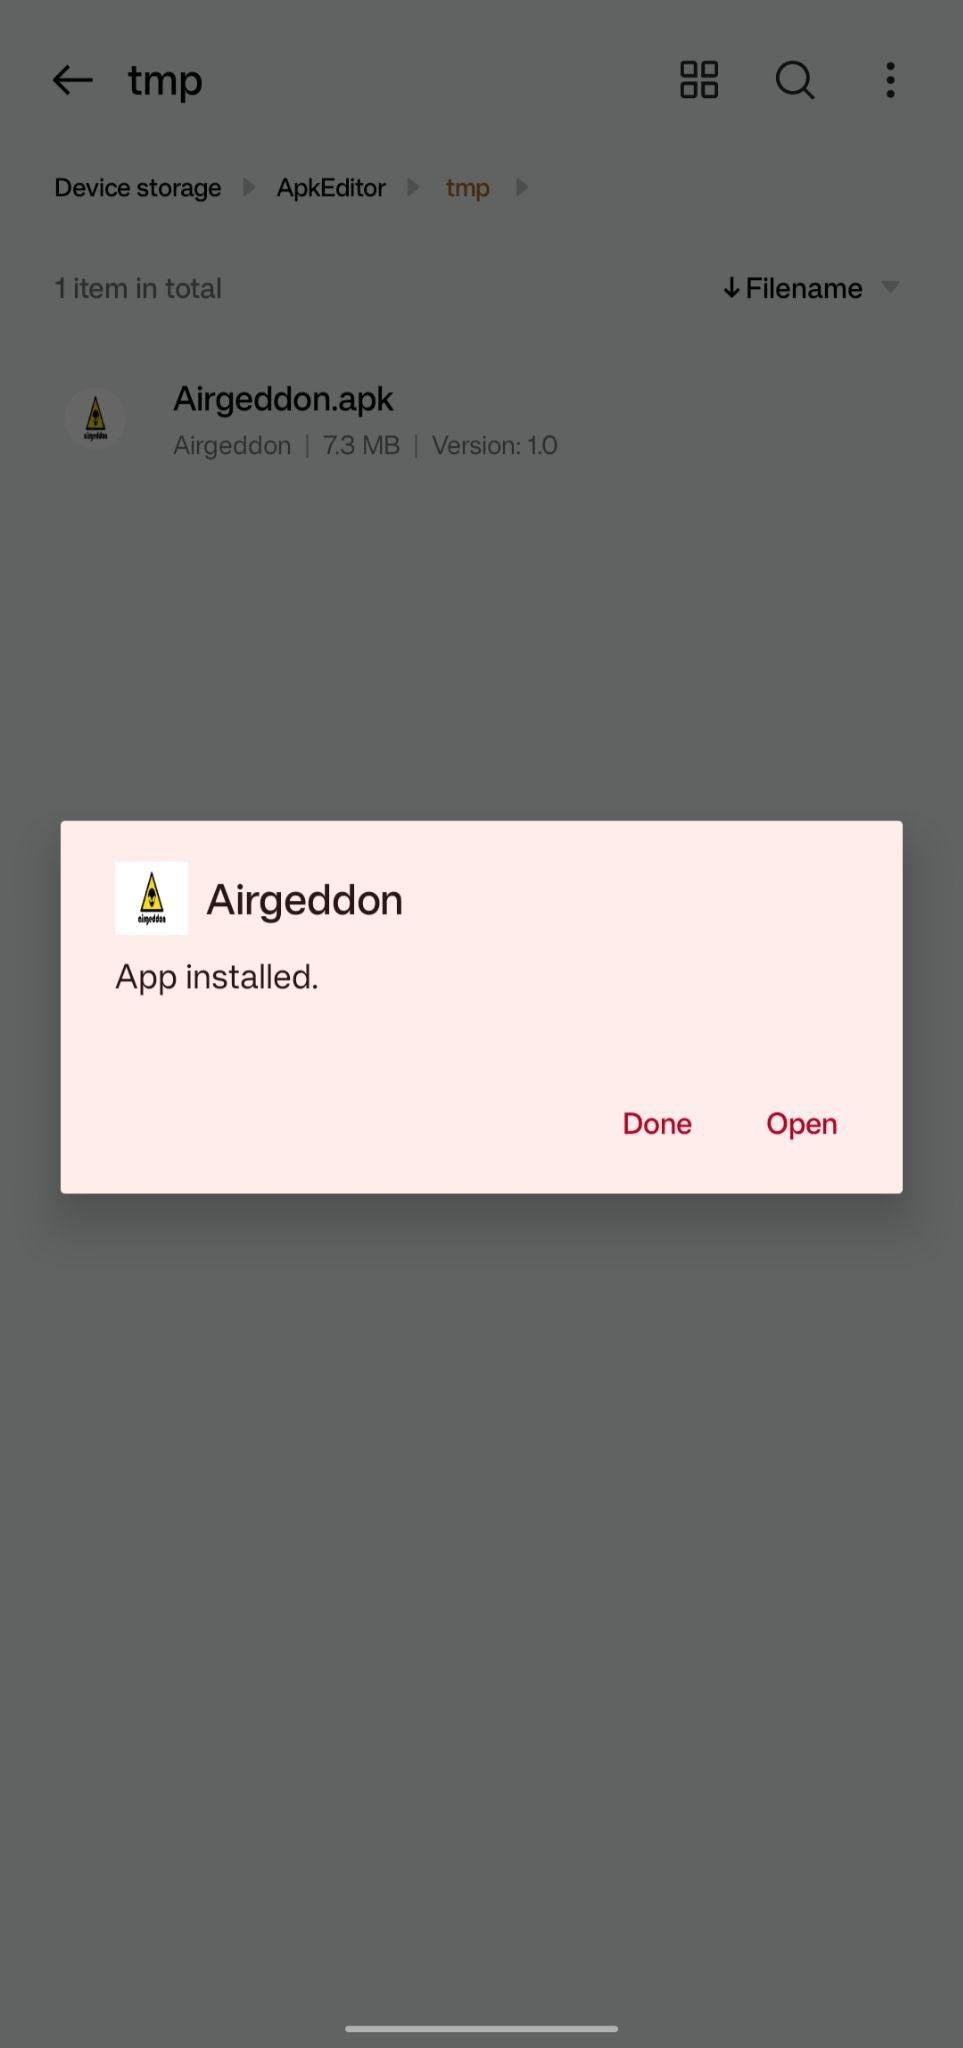 Airgeddon apk installed